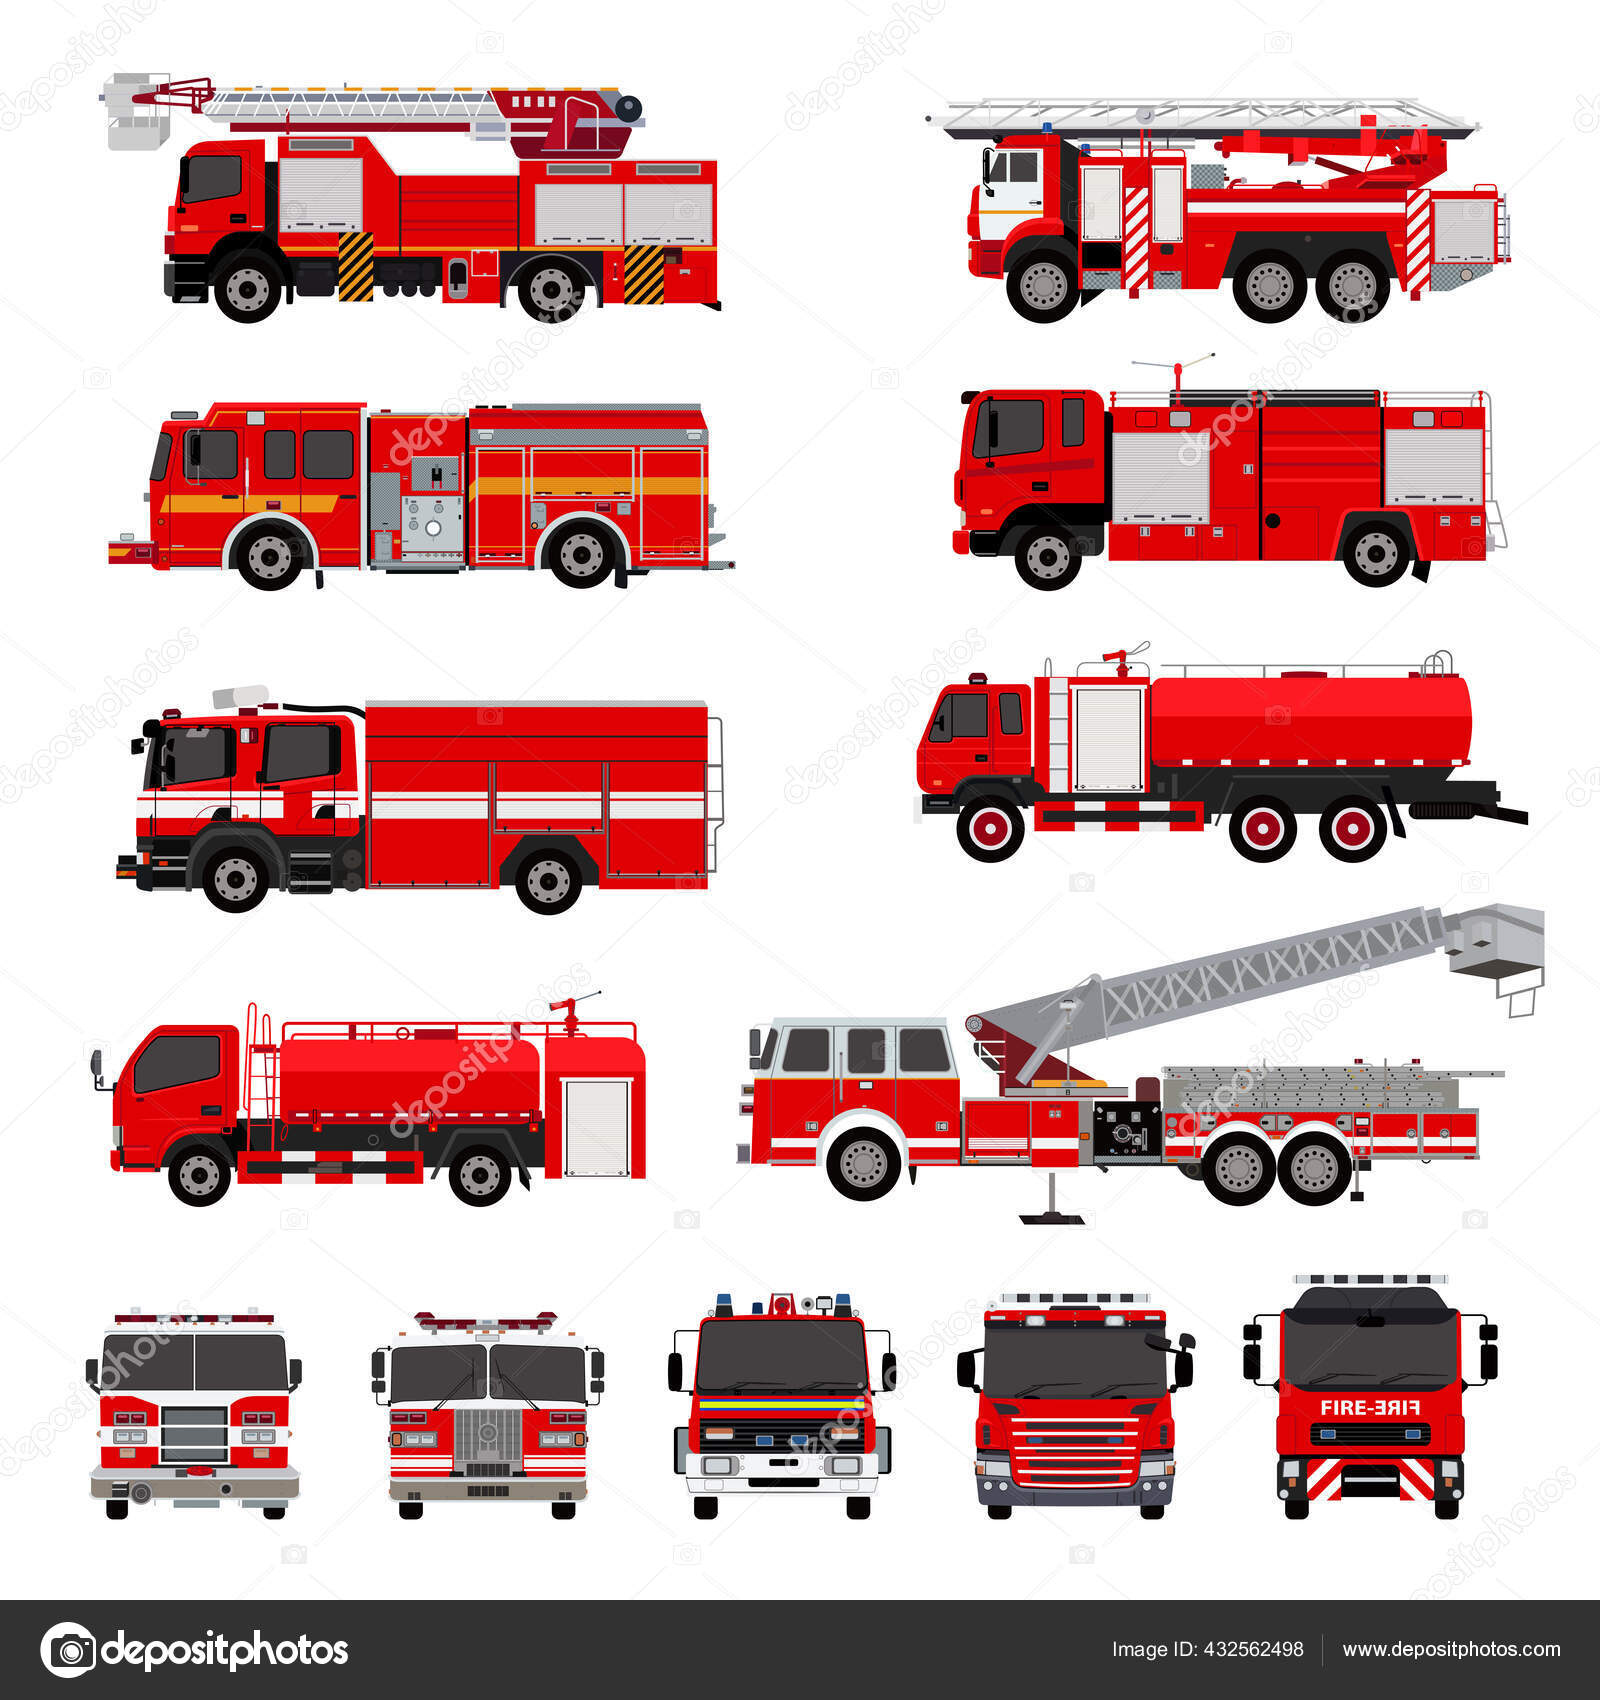 Company Two Fire Wildland Fire Trucks For Sale